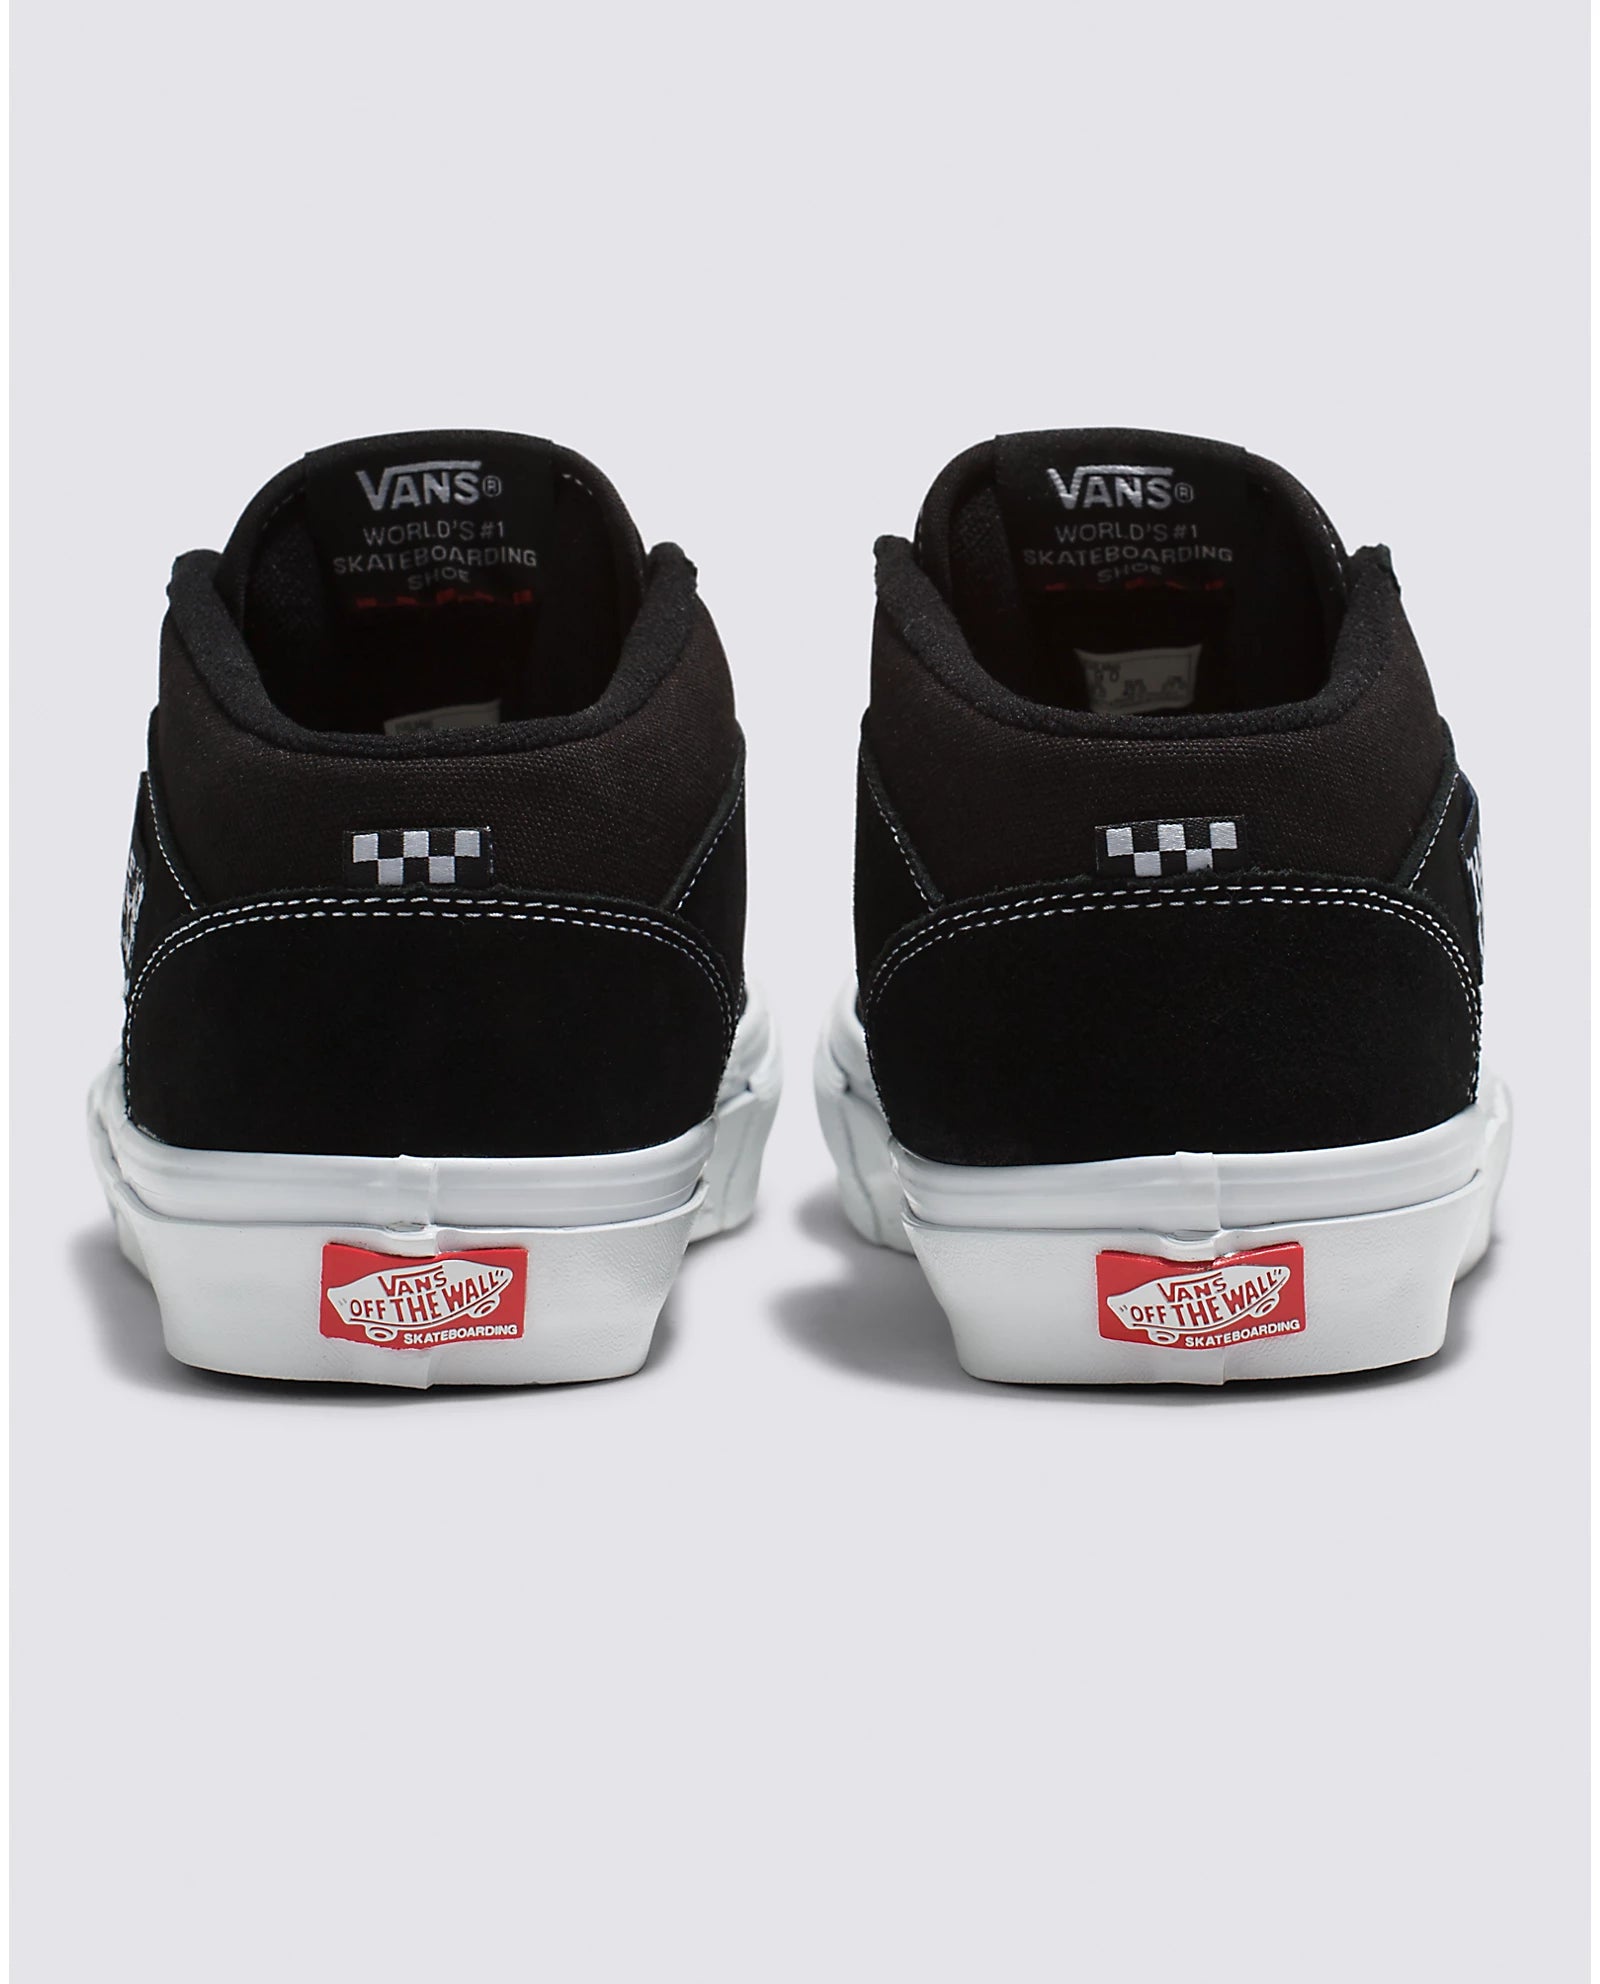 Vans Skate Half Cab Shoe Black/White